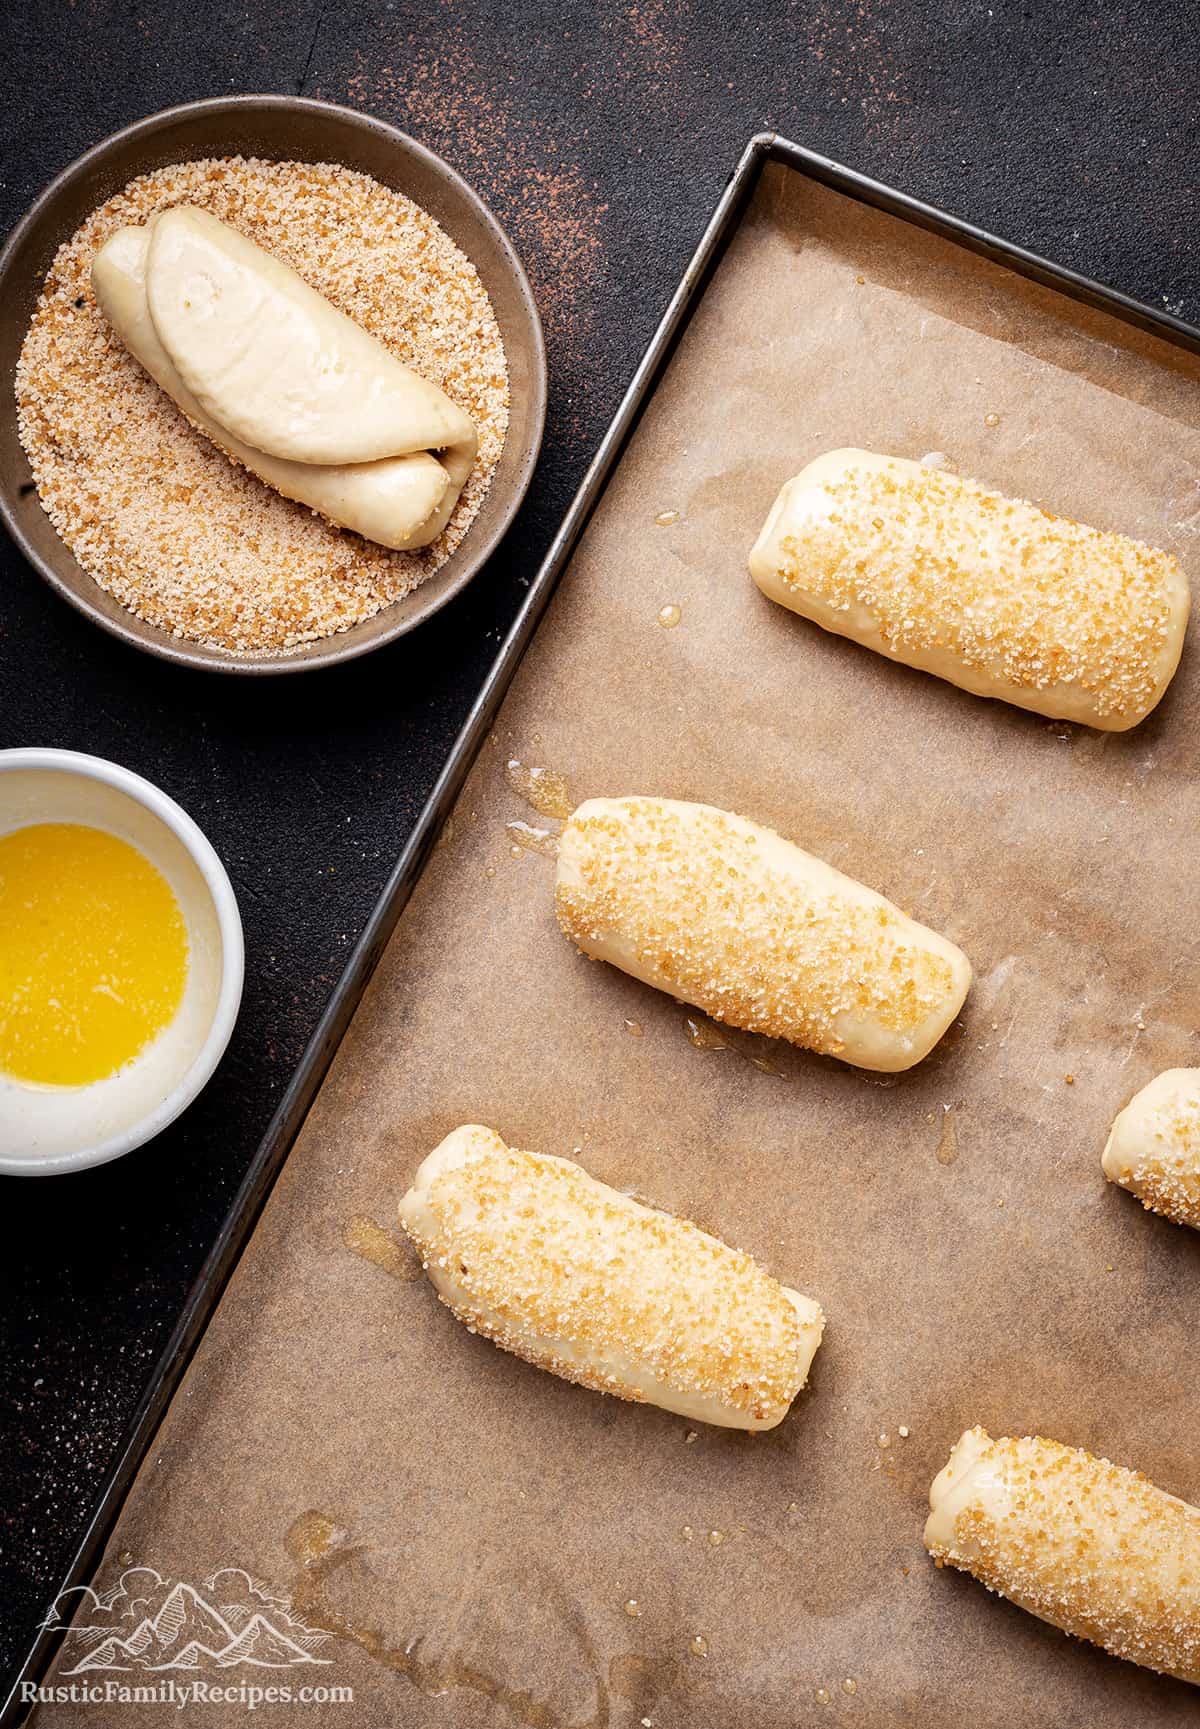 Assembled senorita bread rolls ready to bake on a baking sheet